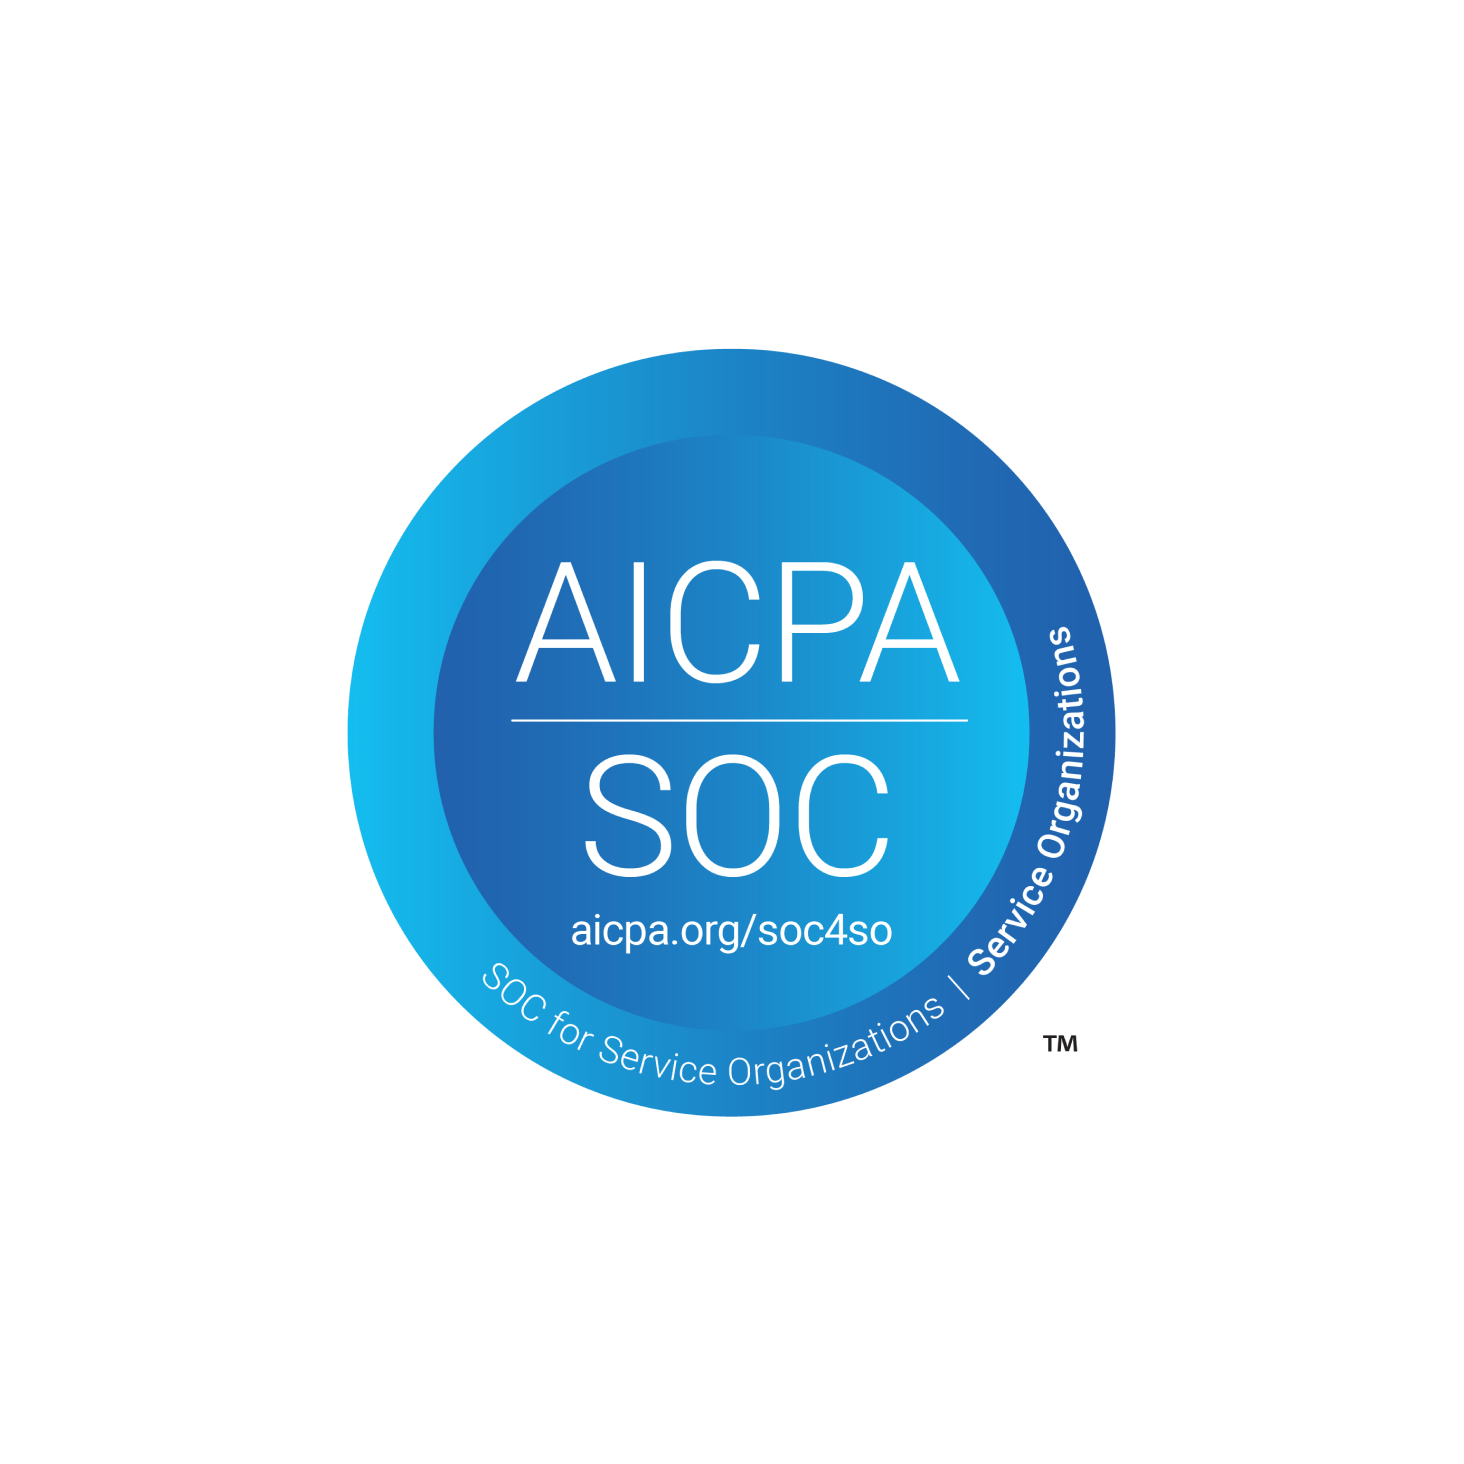 The AICPA SOC Service Organizations badge.